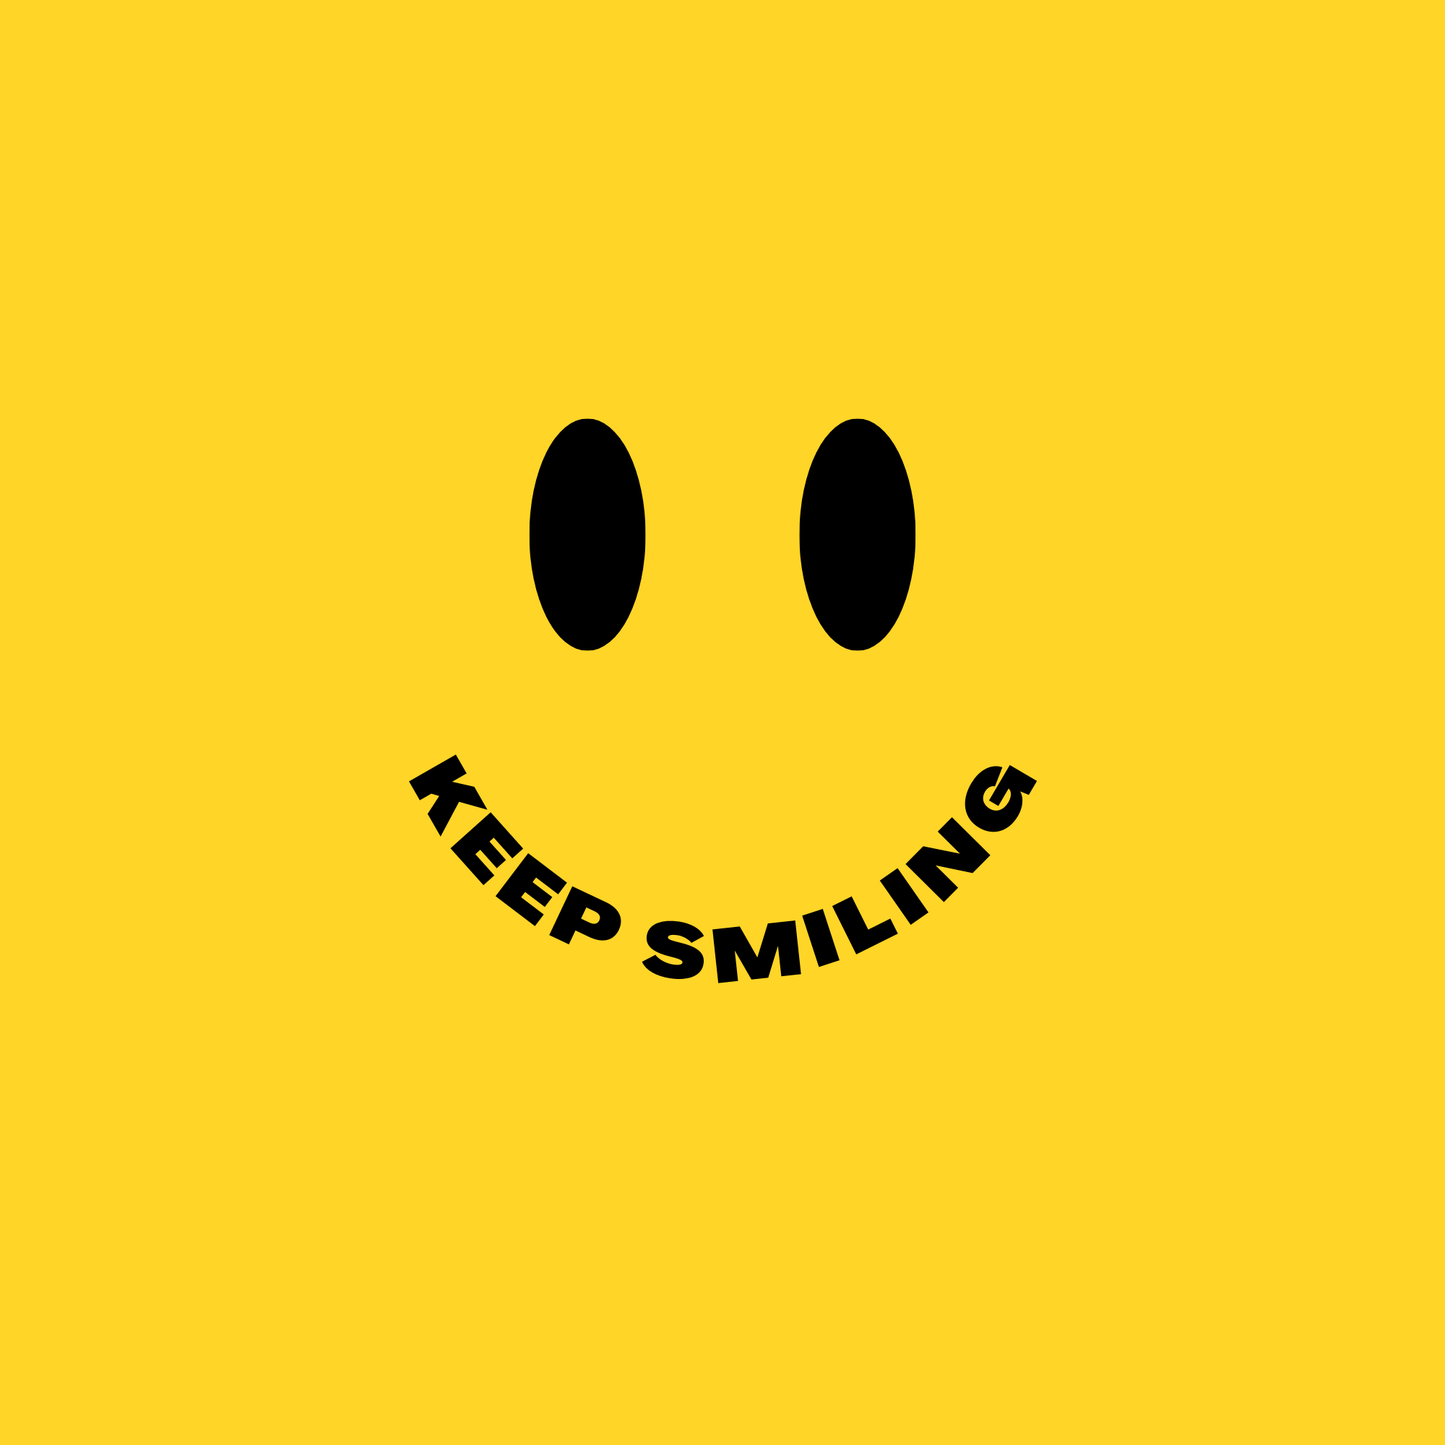 Keep smiling! - Happypack.nl